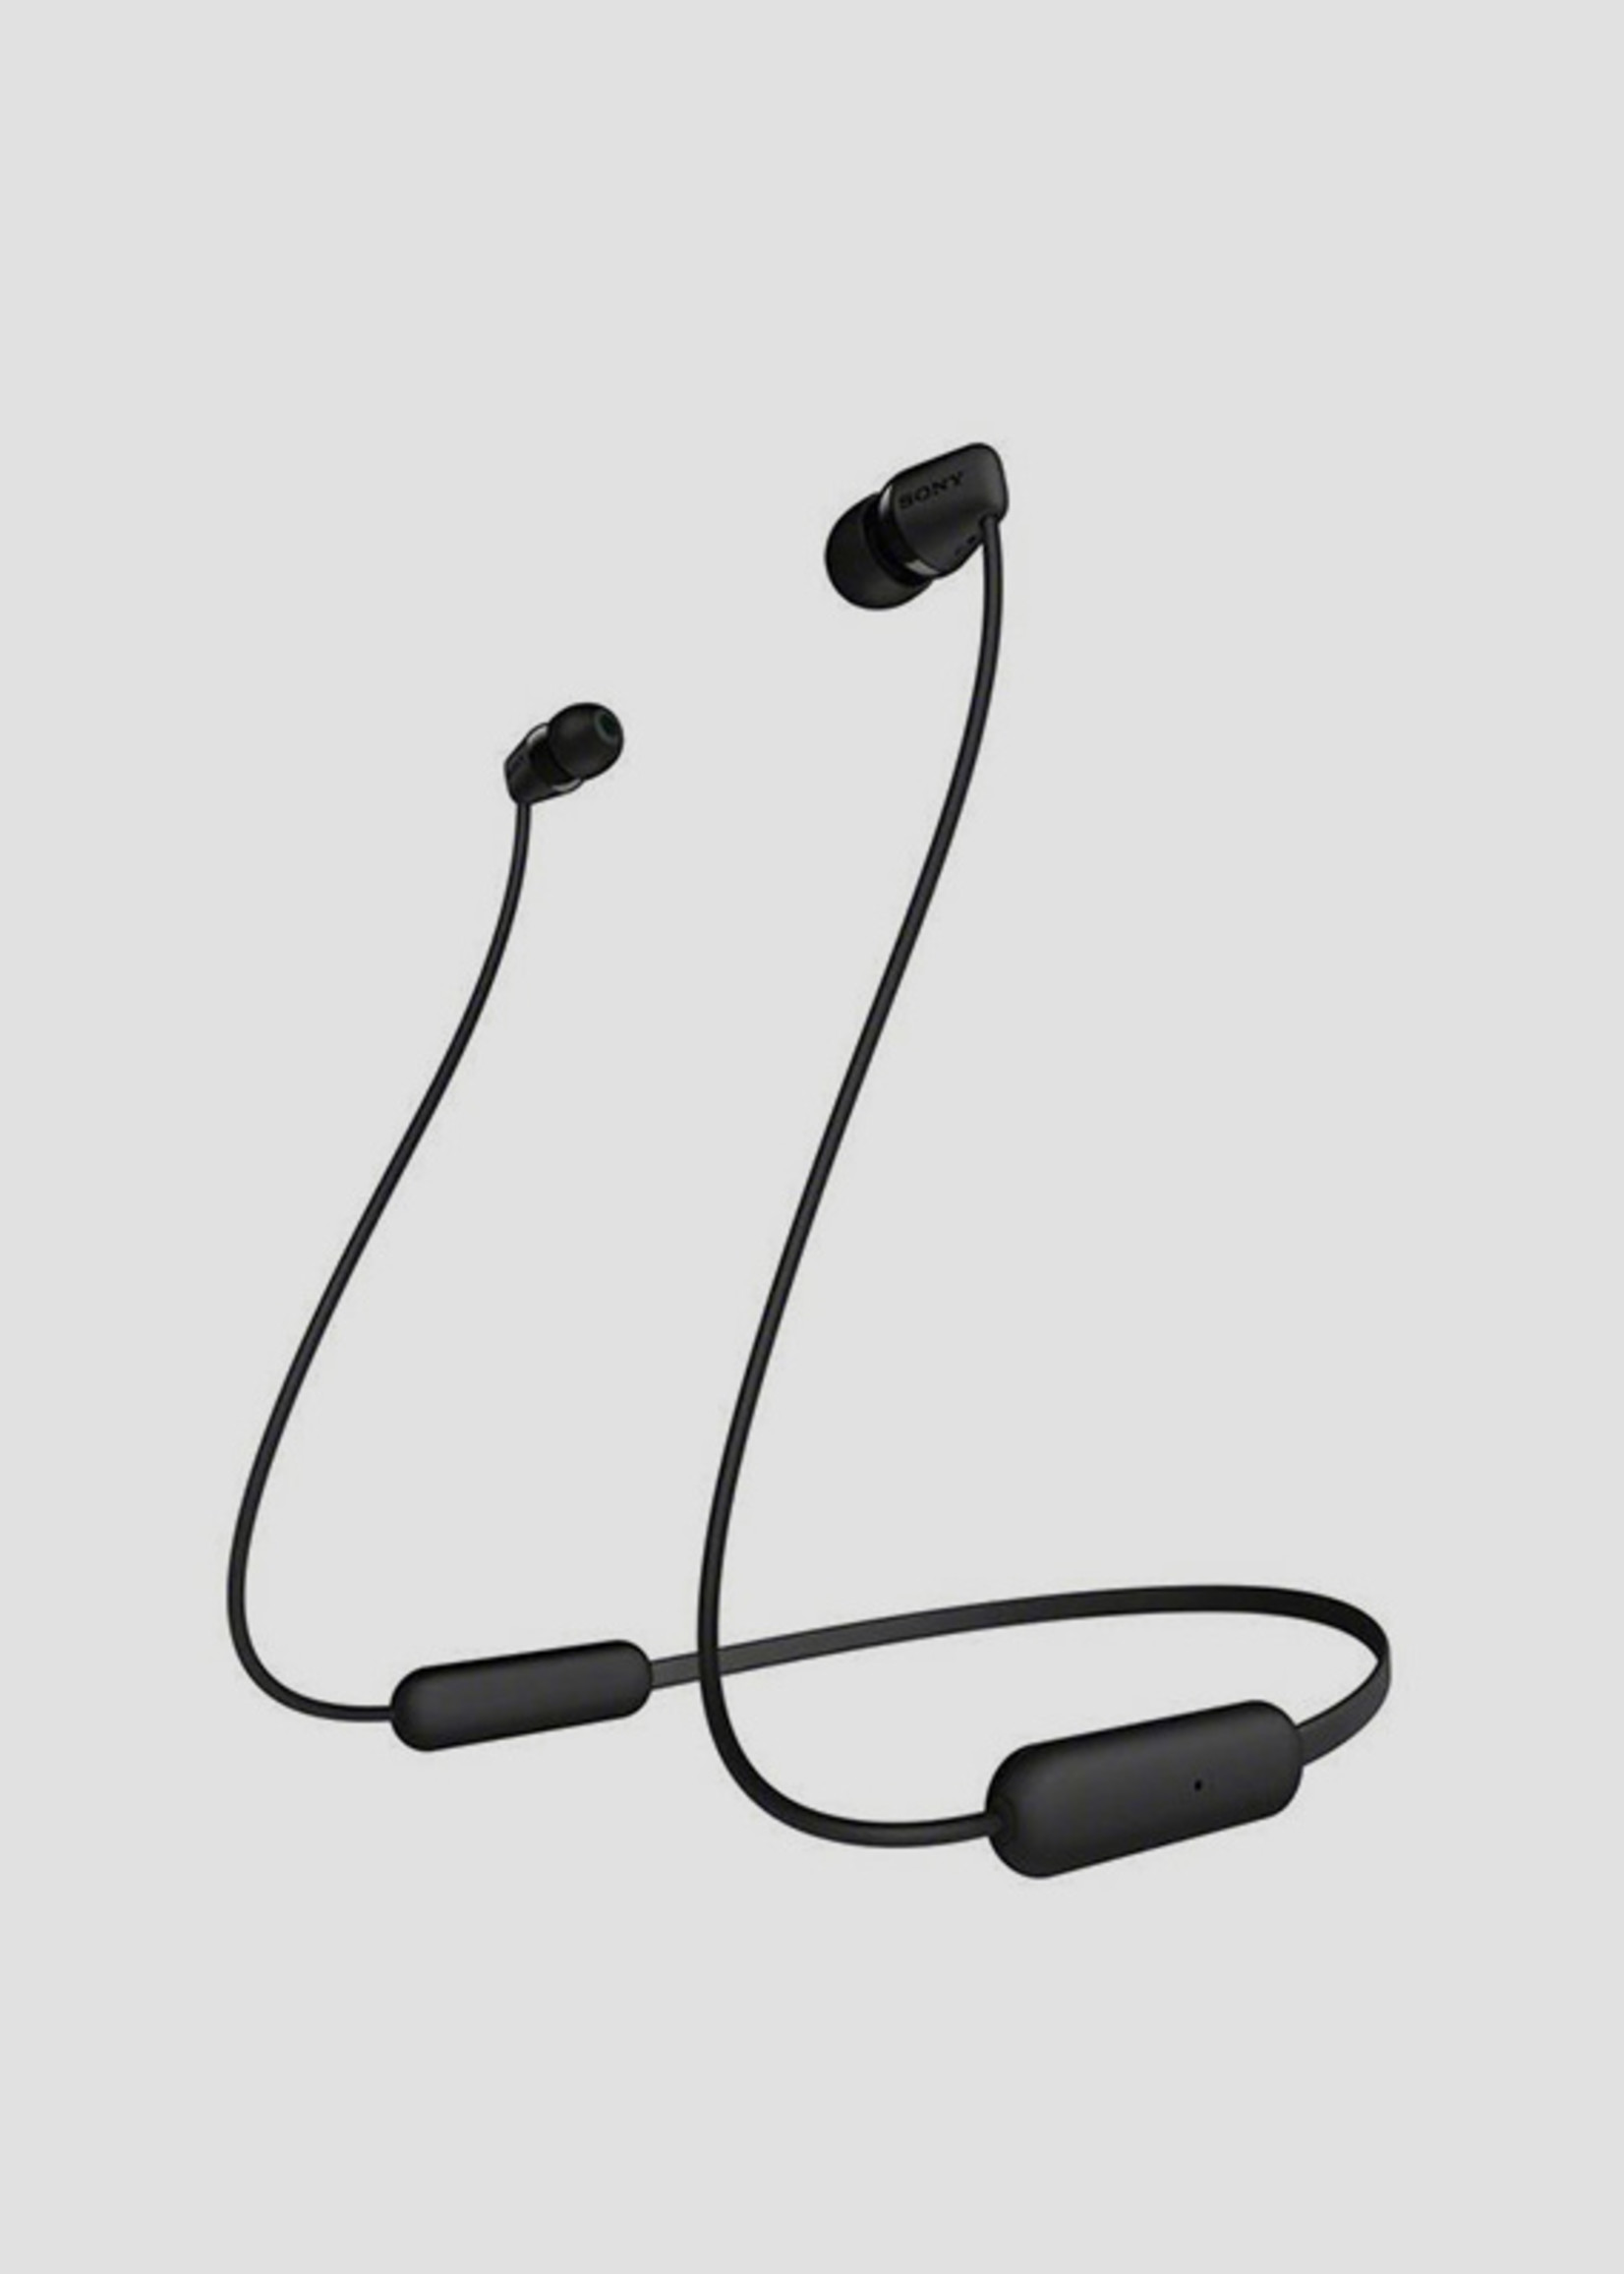 Brand B Noise cancelling headphones